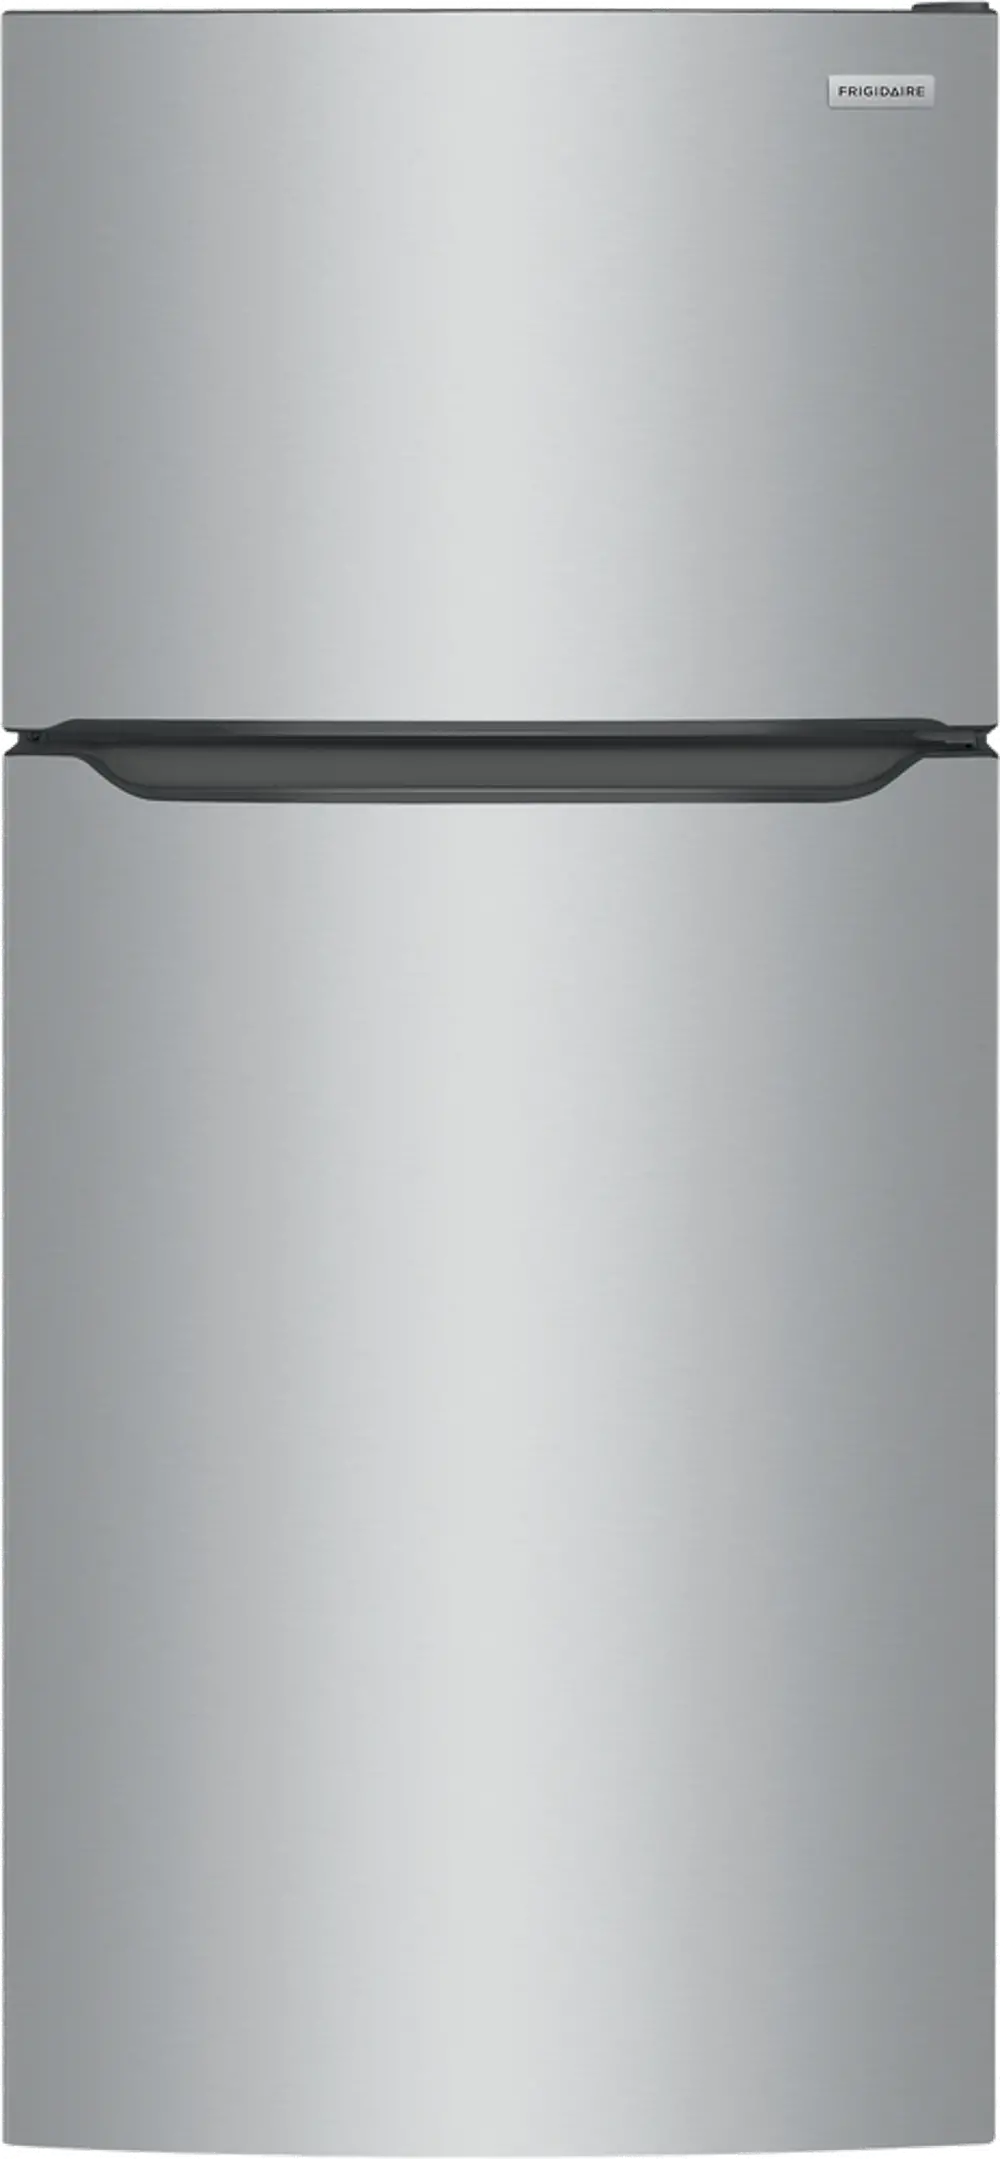 FFTR2045VS-PROJECT Frigidaire 20 cu ft Top Freezer Refrigerator - 30 W Stainless Steel-1